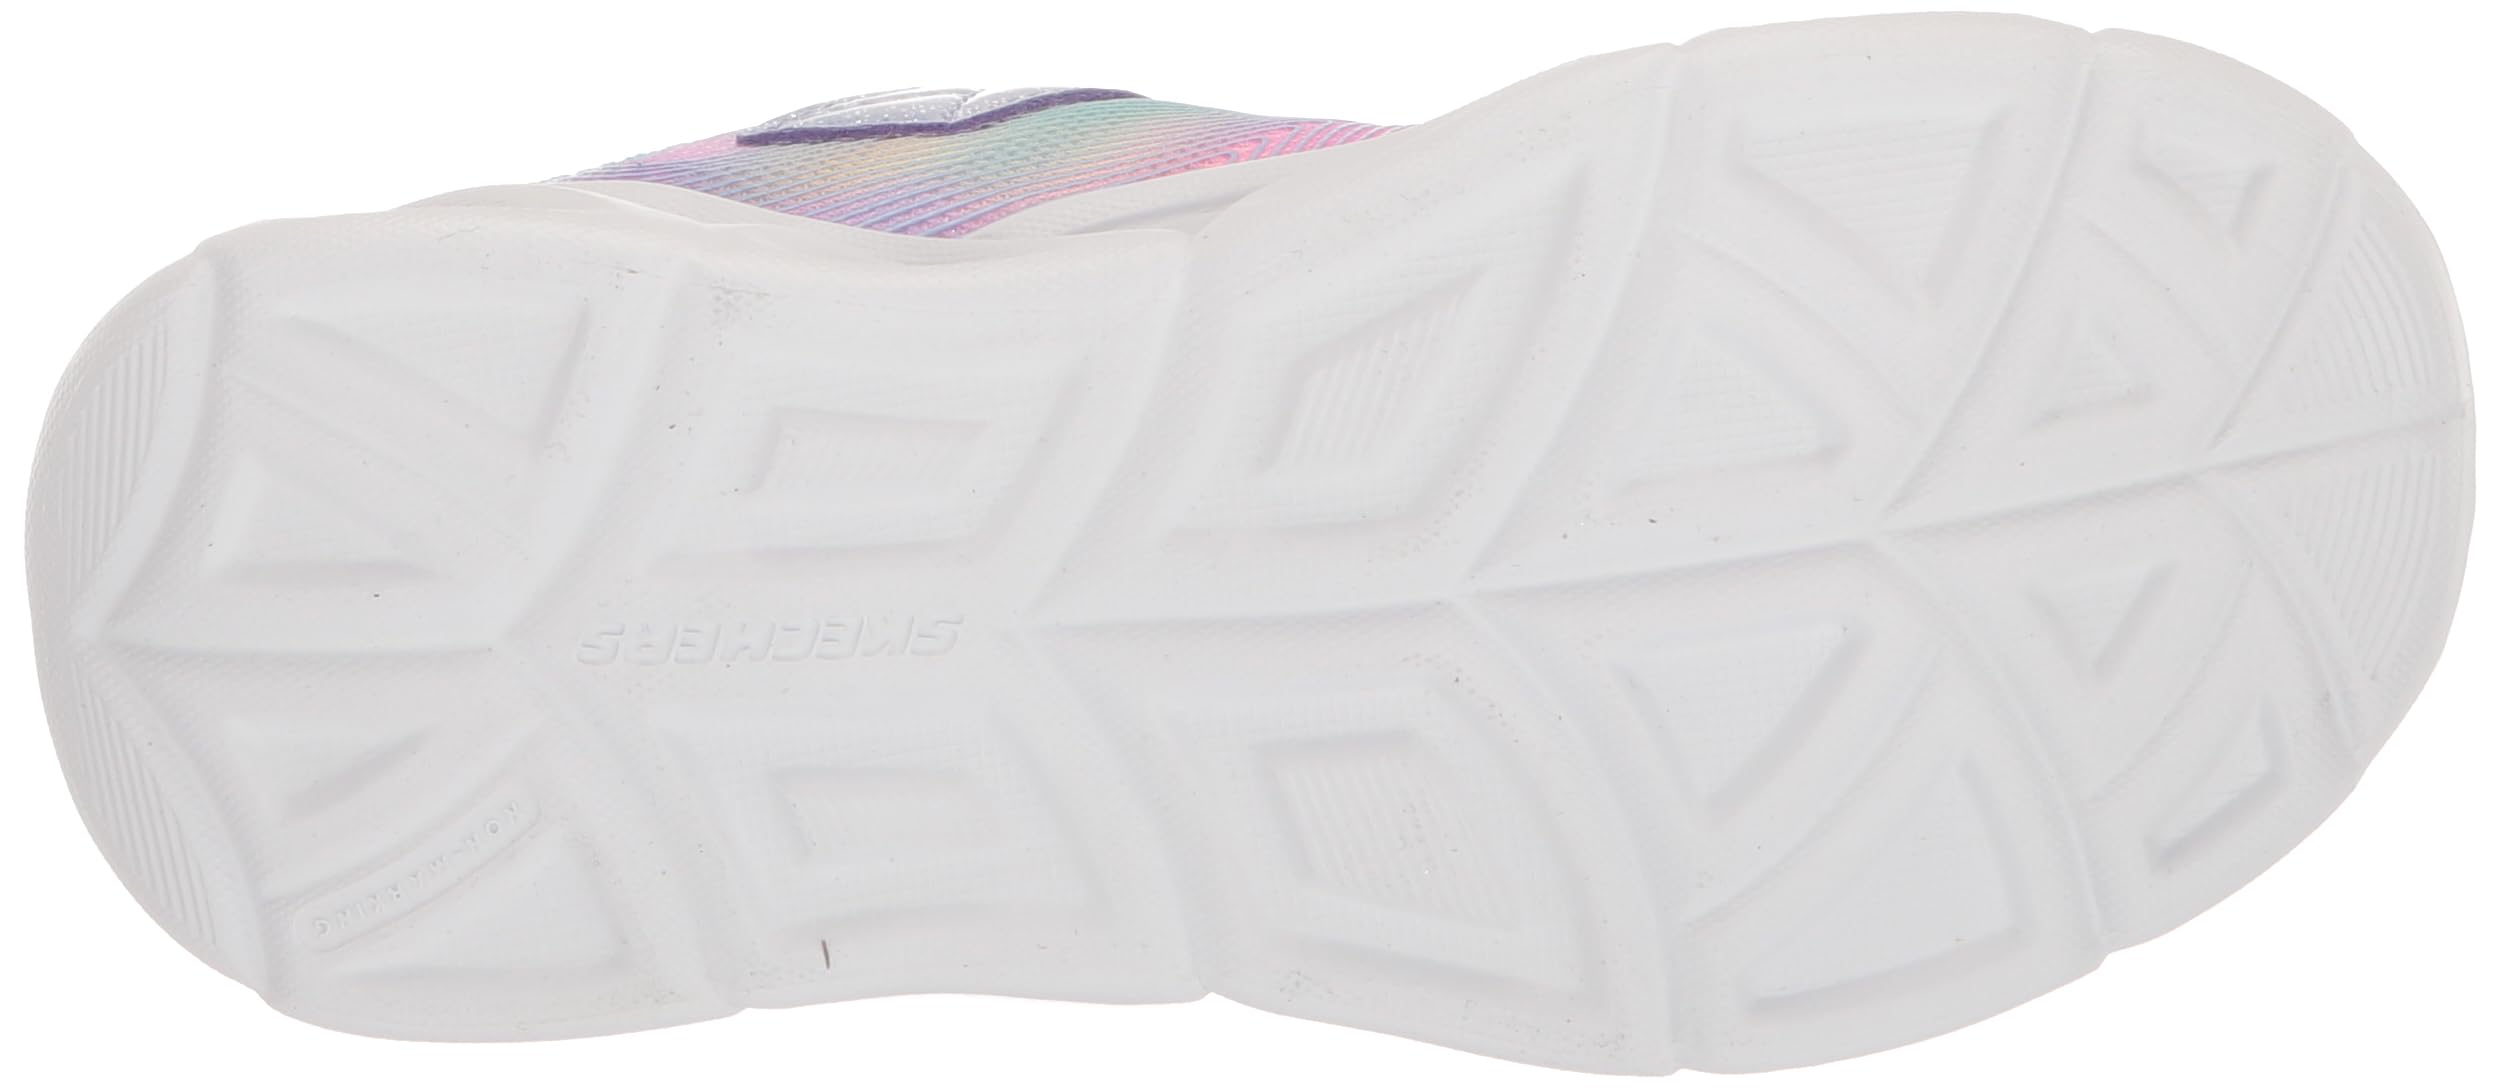 Skechers Unisex-Child Twisty Brights 2.0 Sneaker